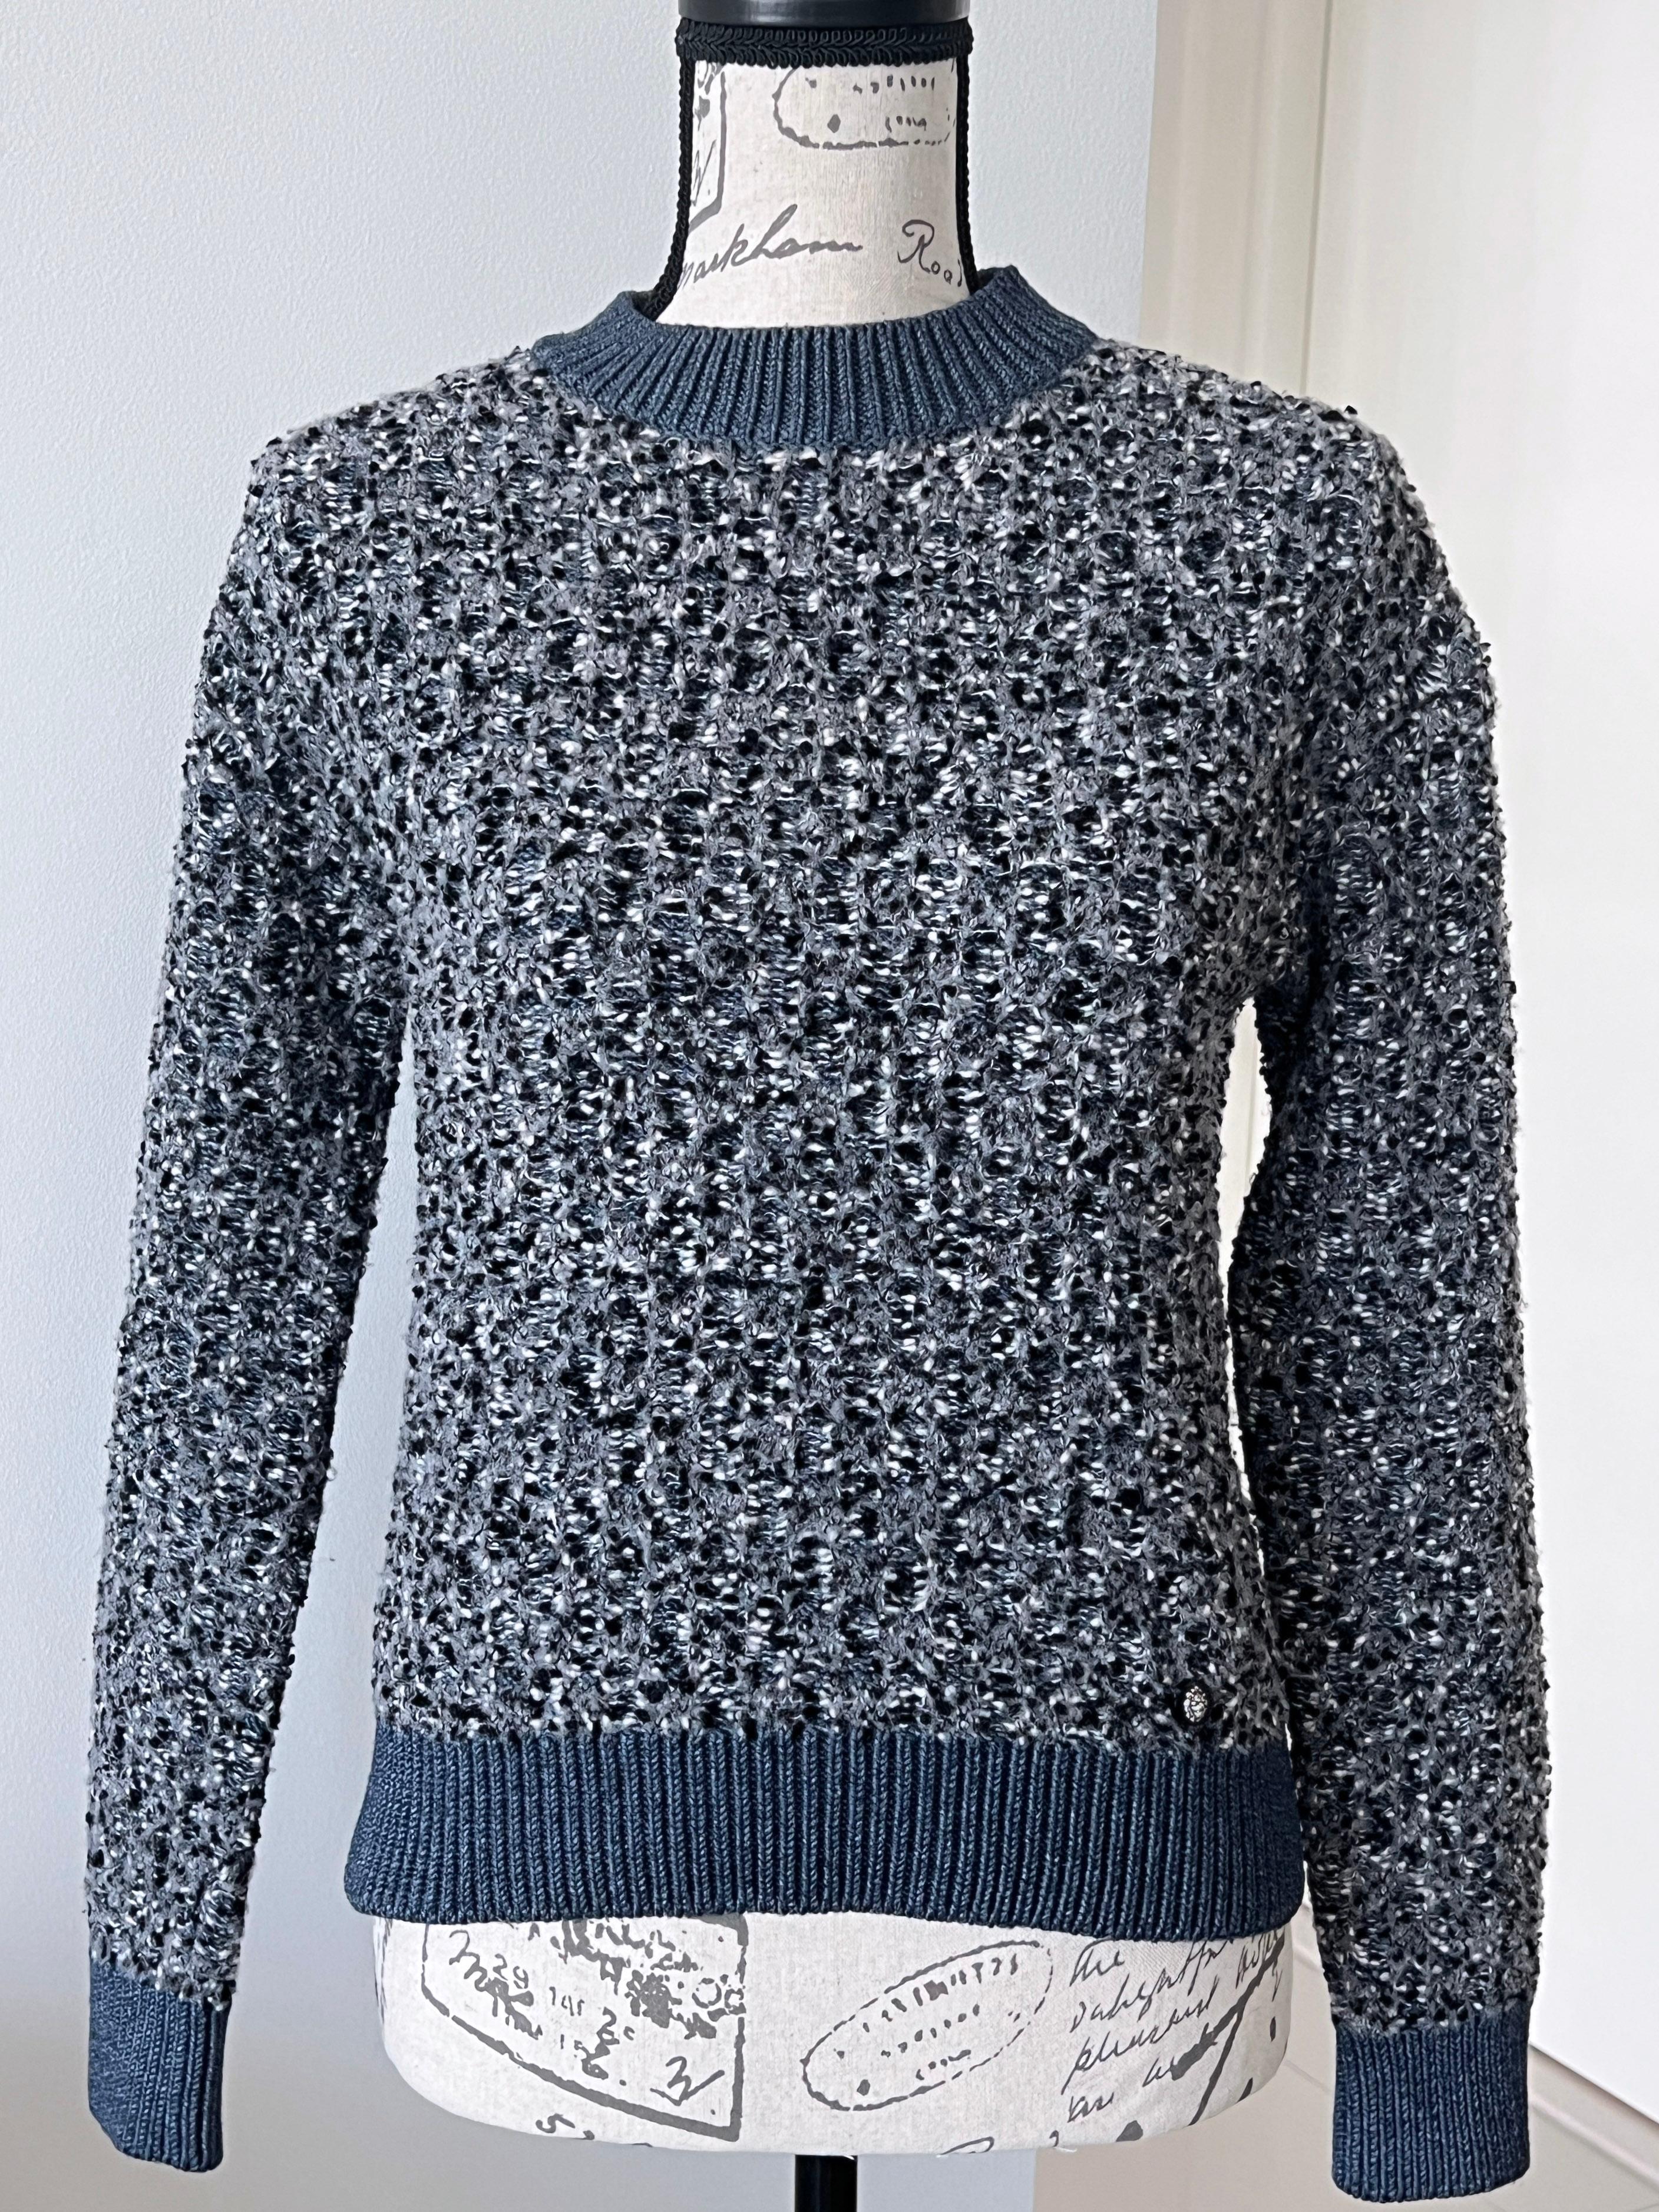 Stunning Chanel blueish grey cashmere & silk jumper from Paris / Edinburgh Collection.
CC logo charm at waist.
Noble steel grey / blueish grey color!
 Size mark 34 FR.
Condition is pristine.